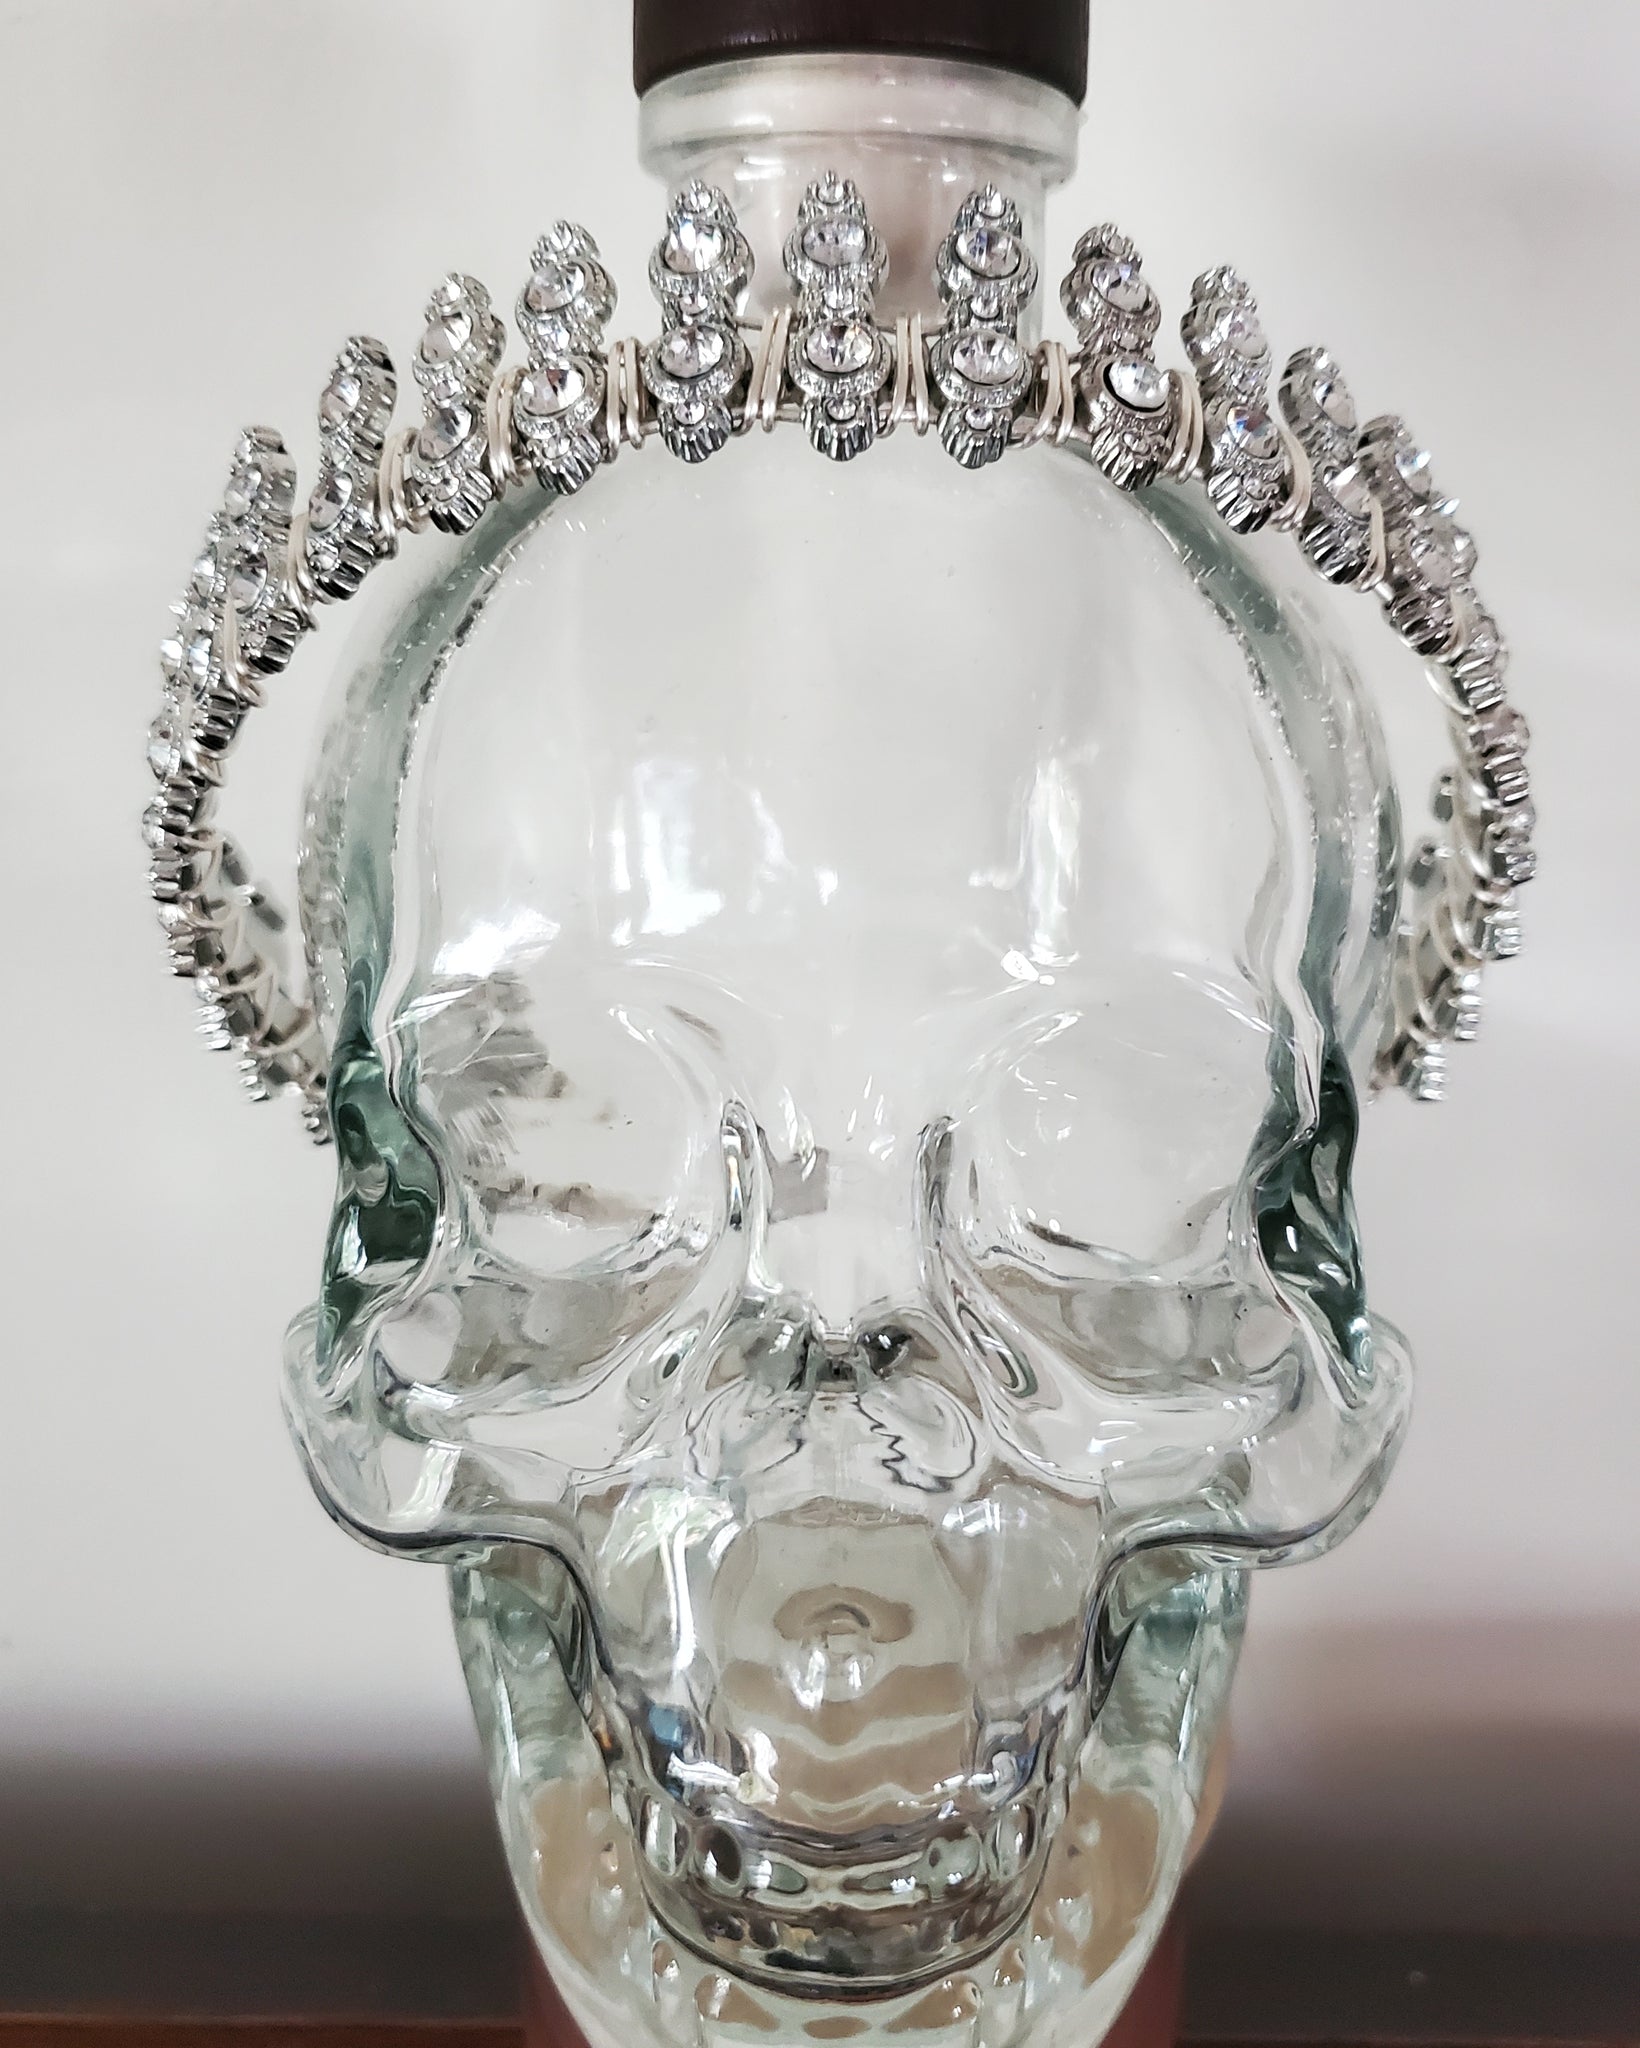 Heavy Rhinestone Tiara Headband Crown